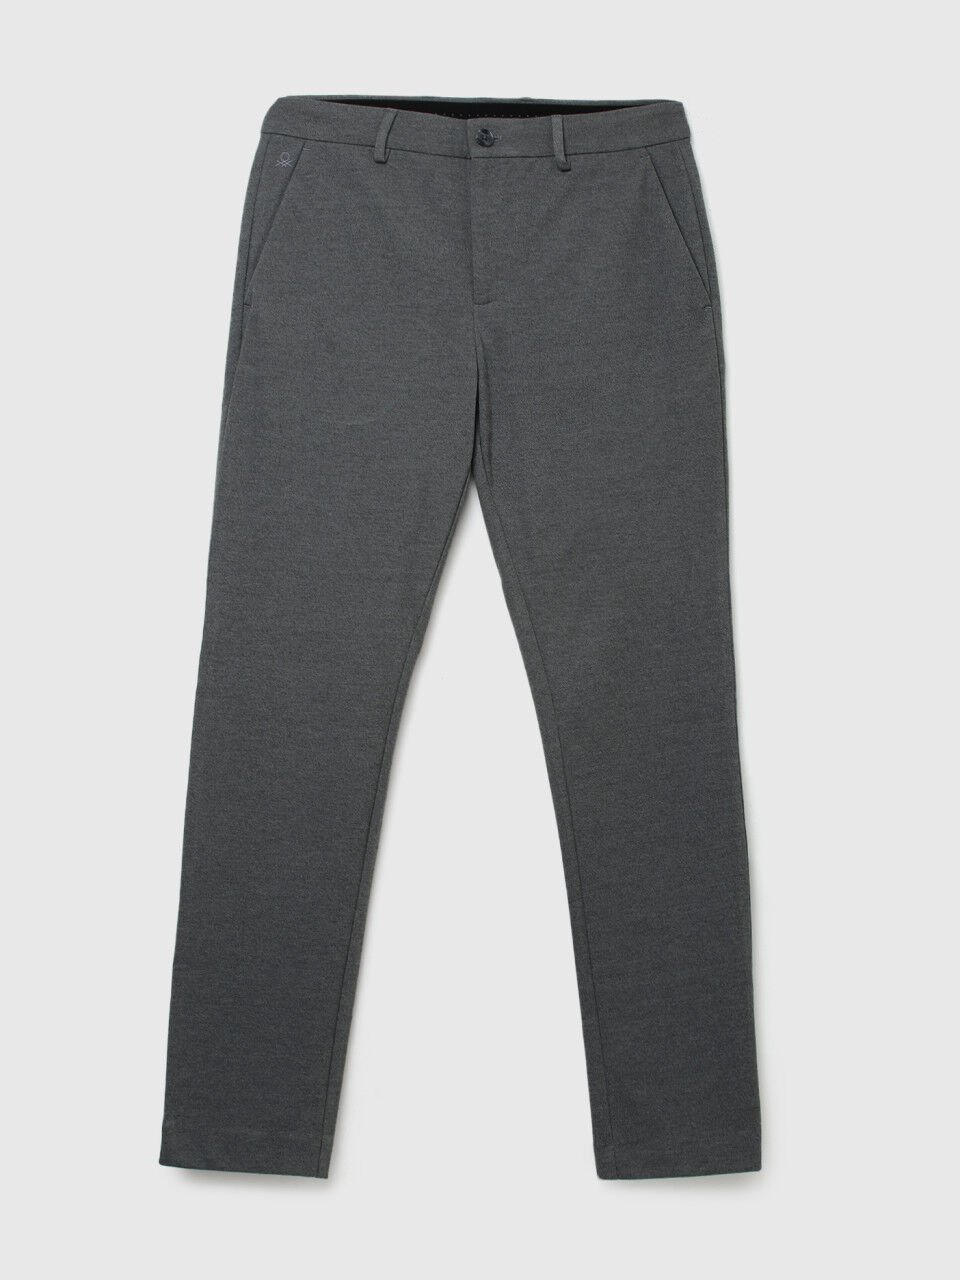 Buy Khaki Trousers  Pants for Men by UNITED COLORS OF BENETTON Online   Ajiocom